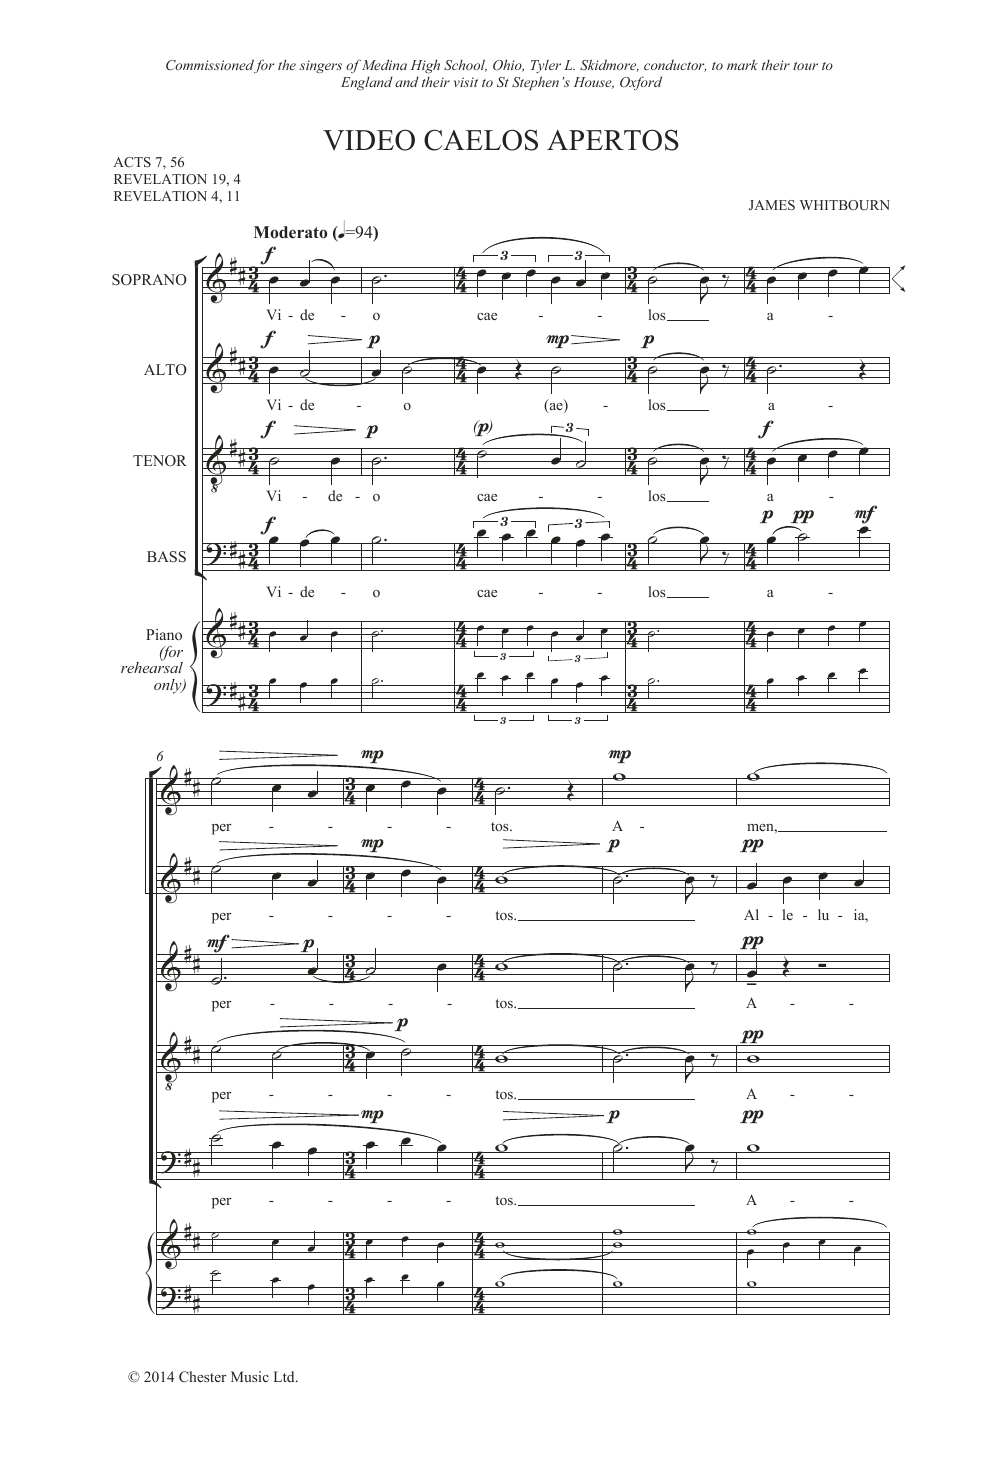 James Whitbourn Video Caelos Apertos Sheet Music Notes & Chords for SATB Choir - Download or Print PDF